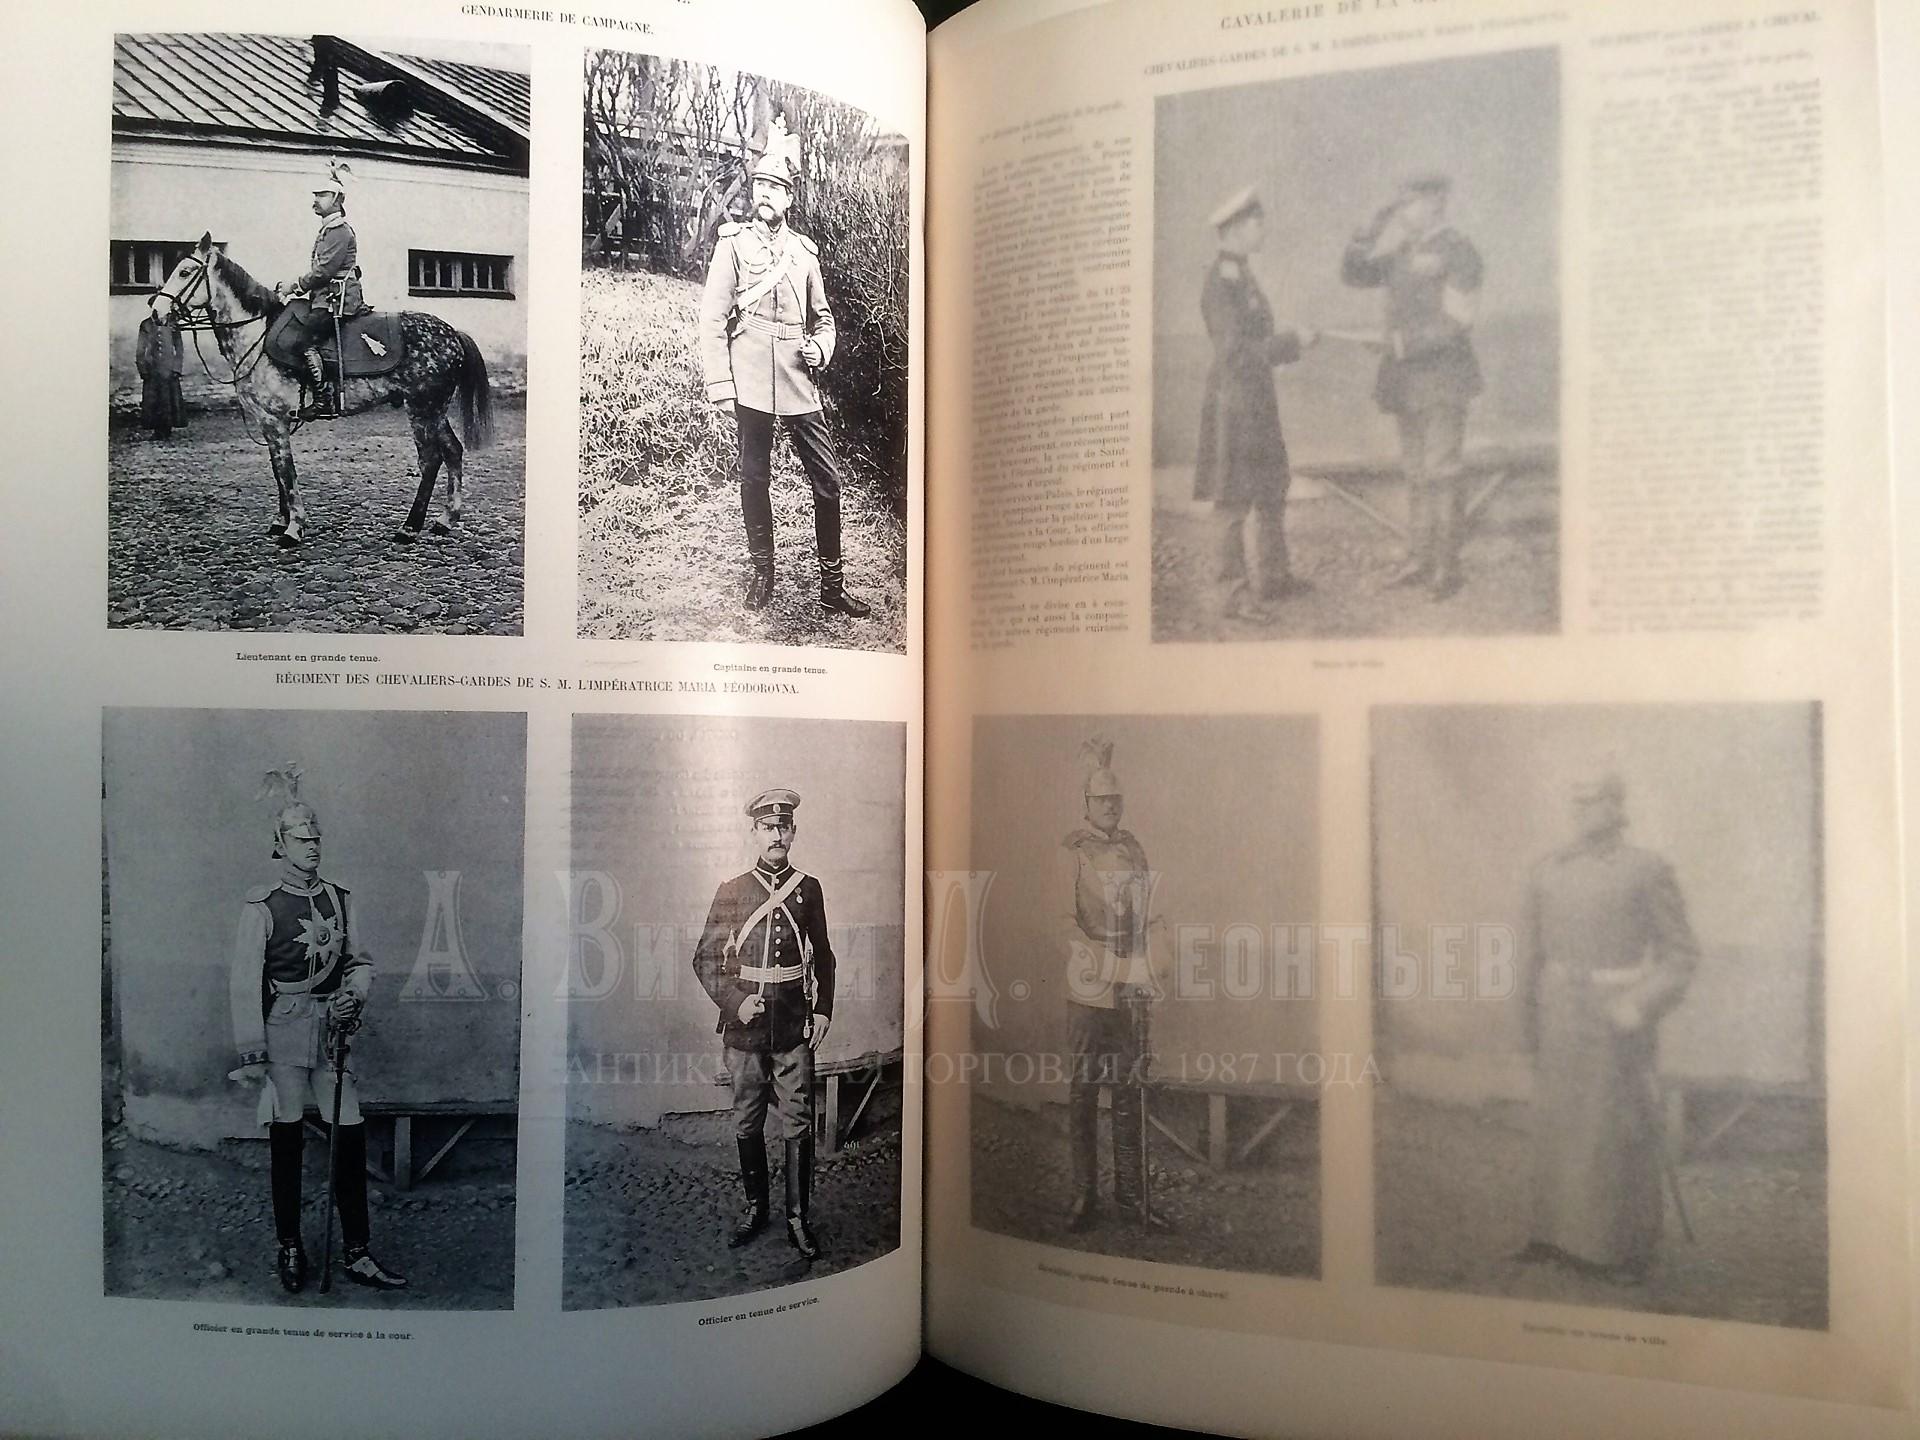 L'armee russe d'apres photographies instantanees executees par MM. de Jongh freres.